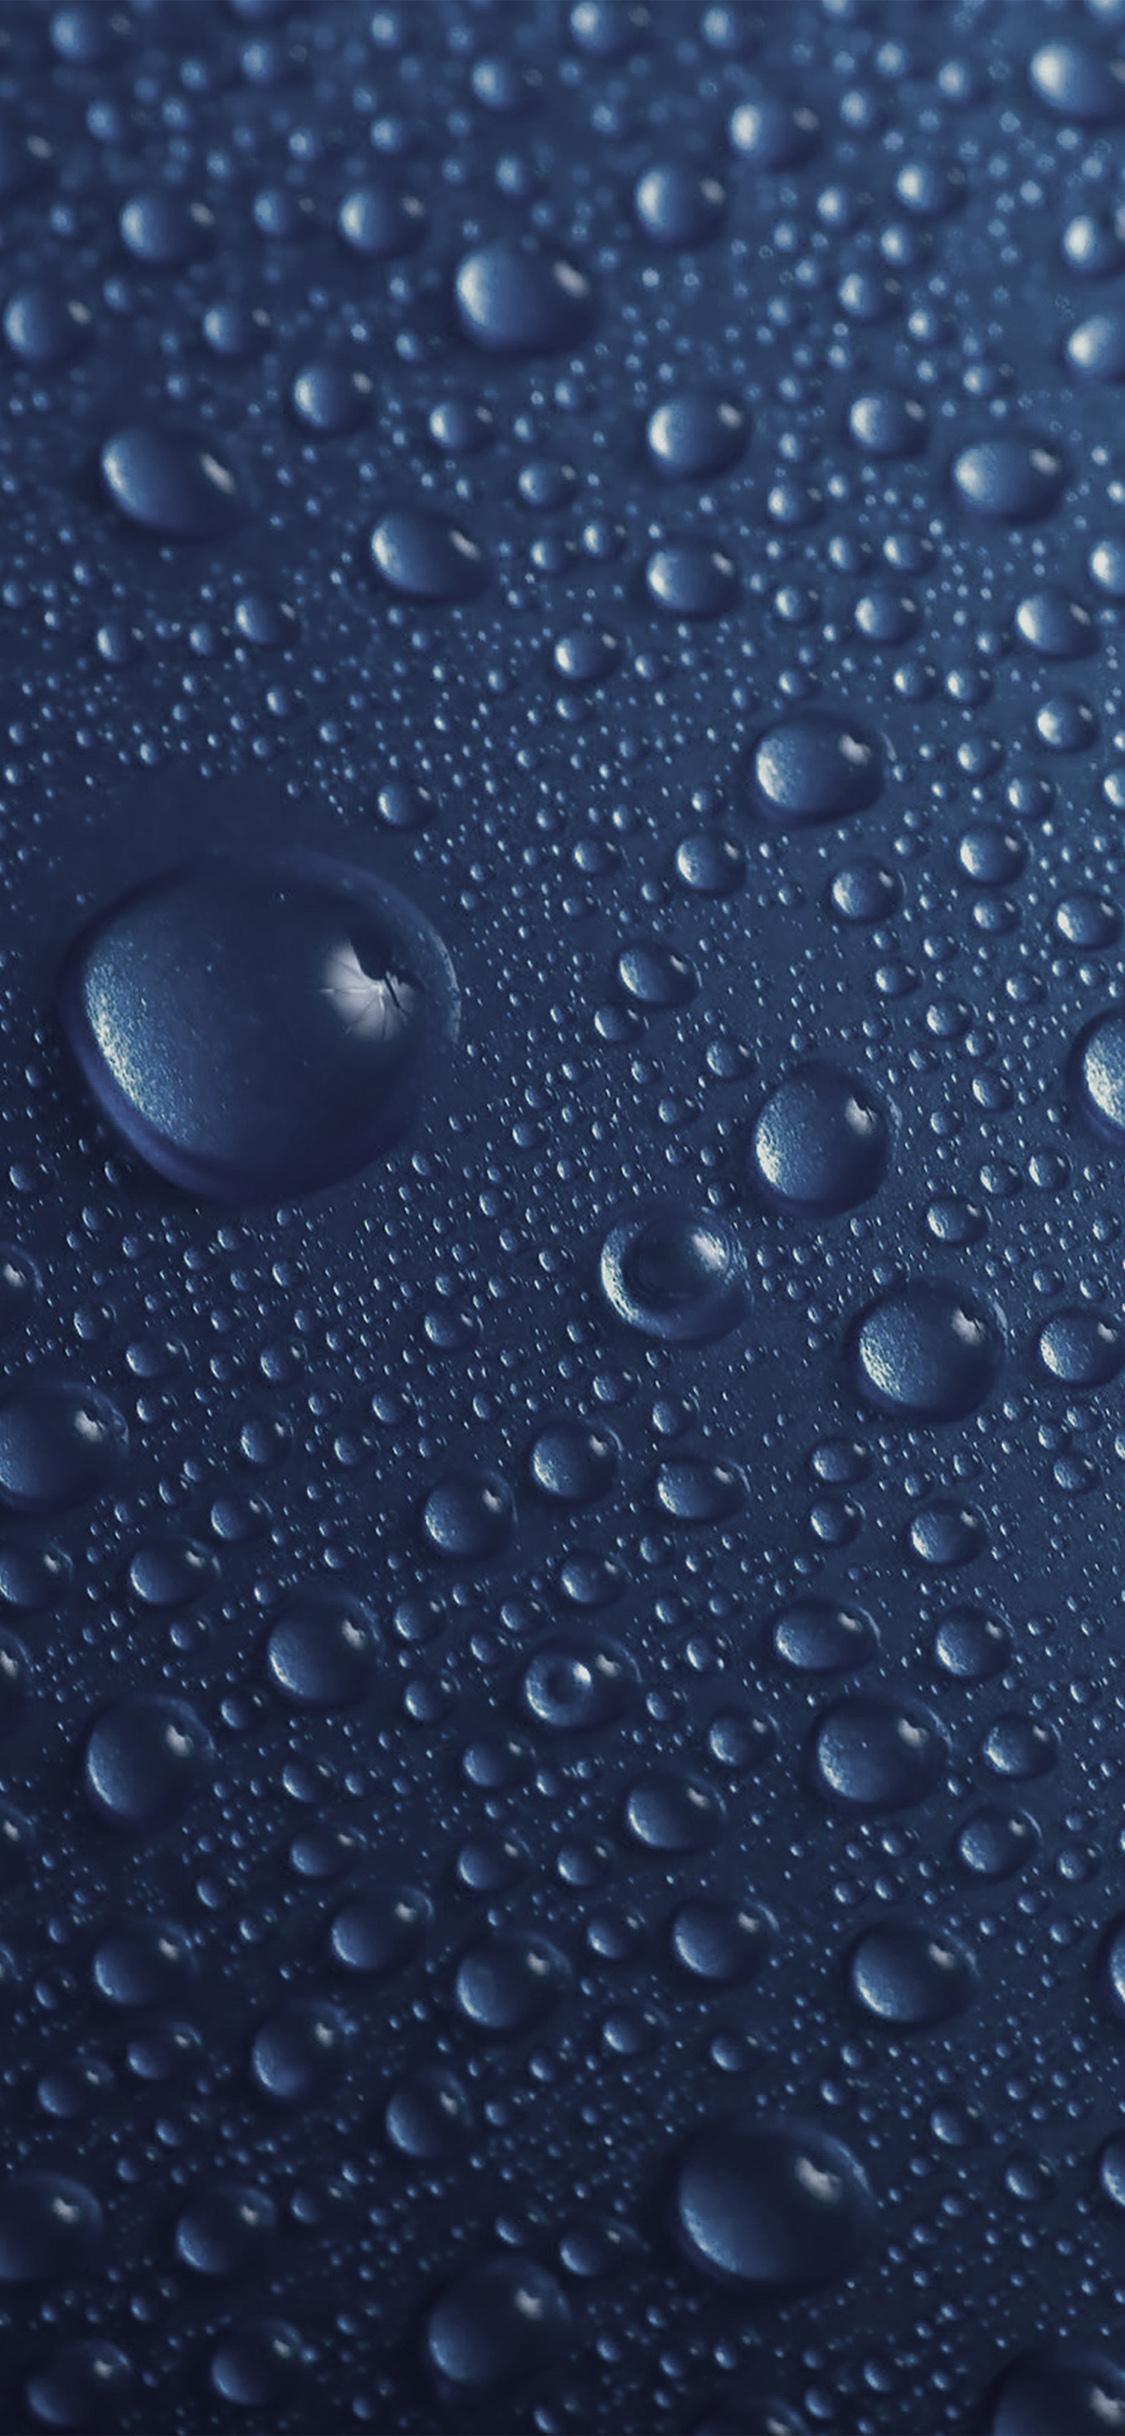 iPhone 8 wallpaper. rain drop blue